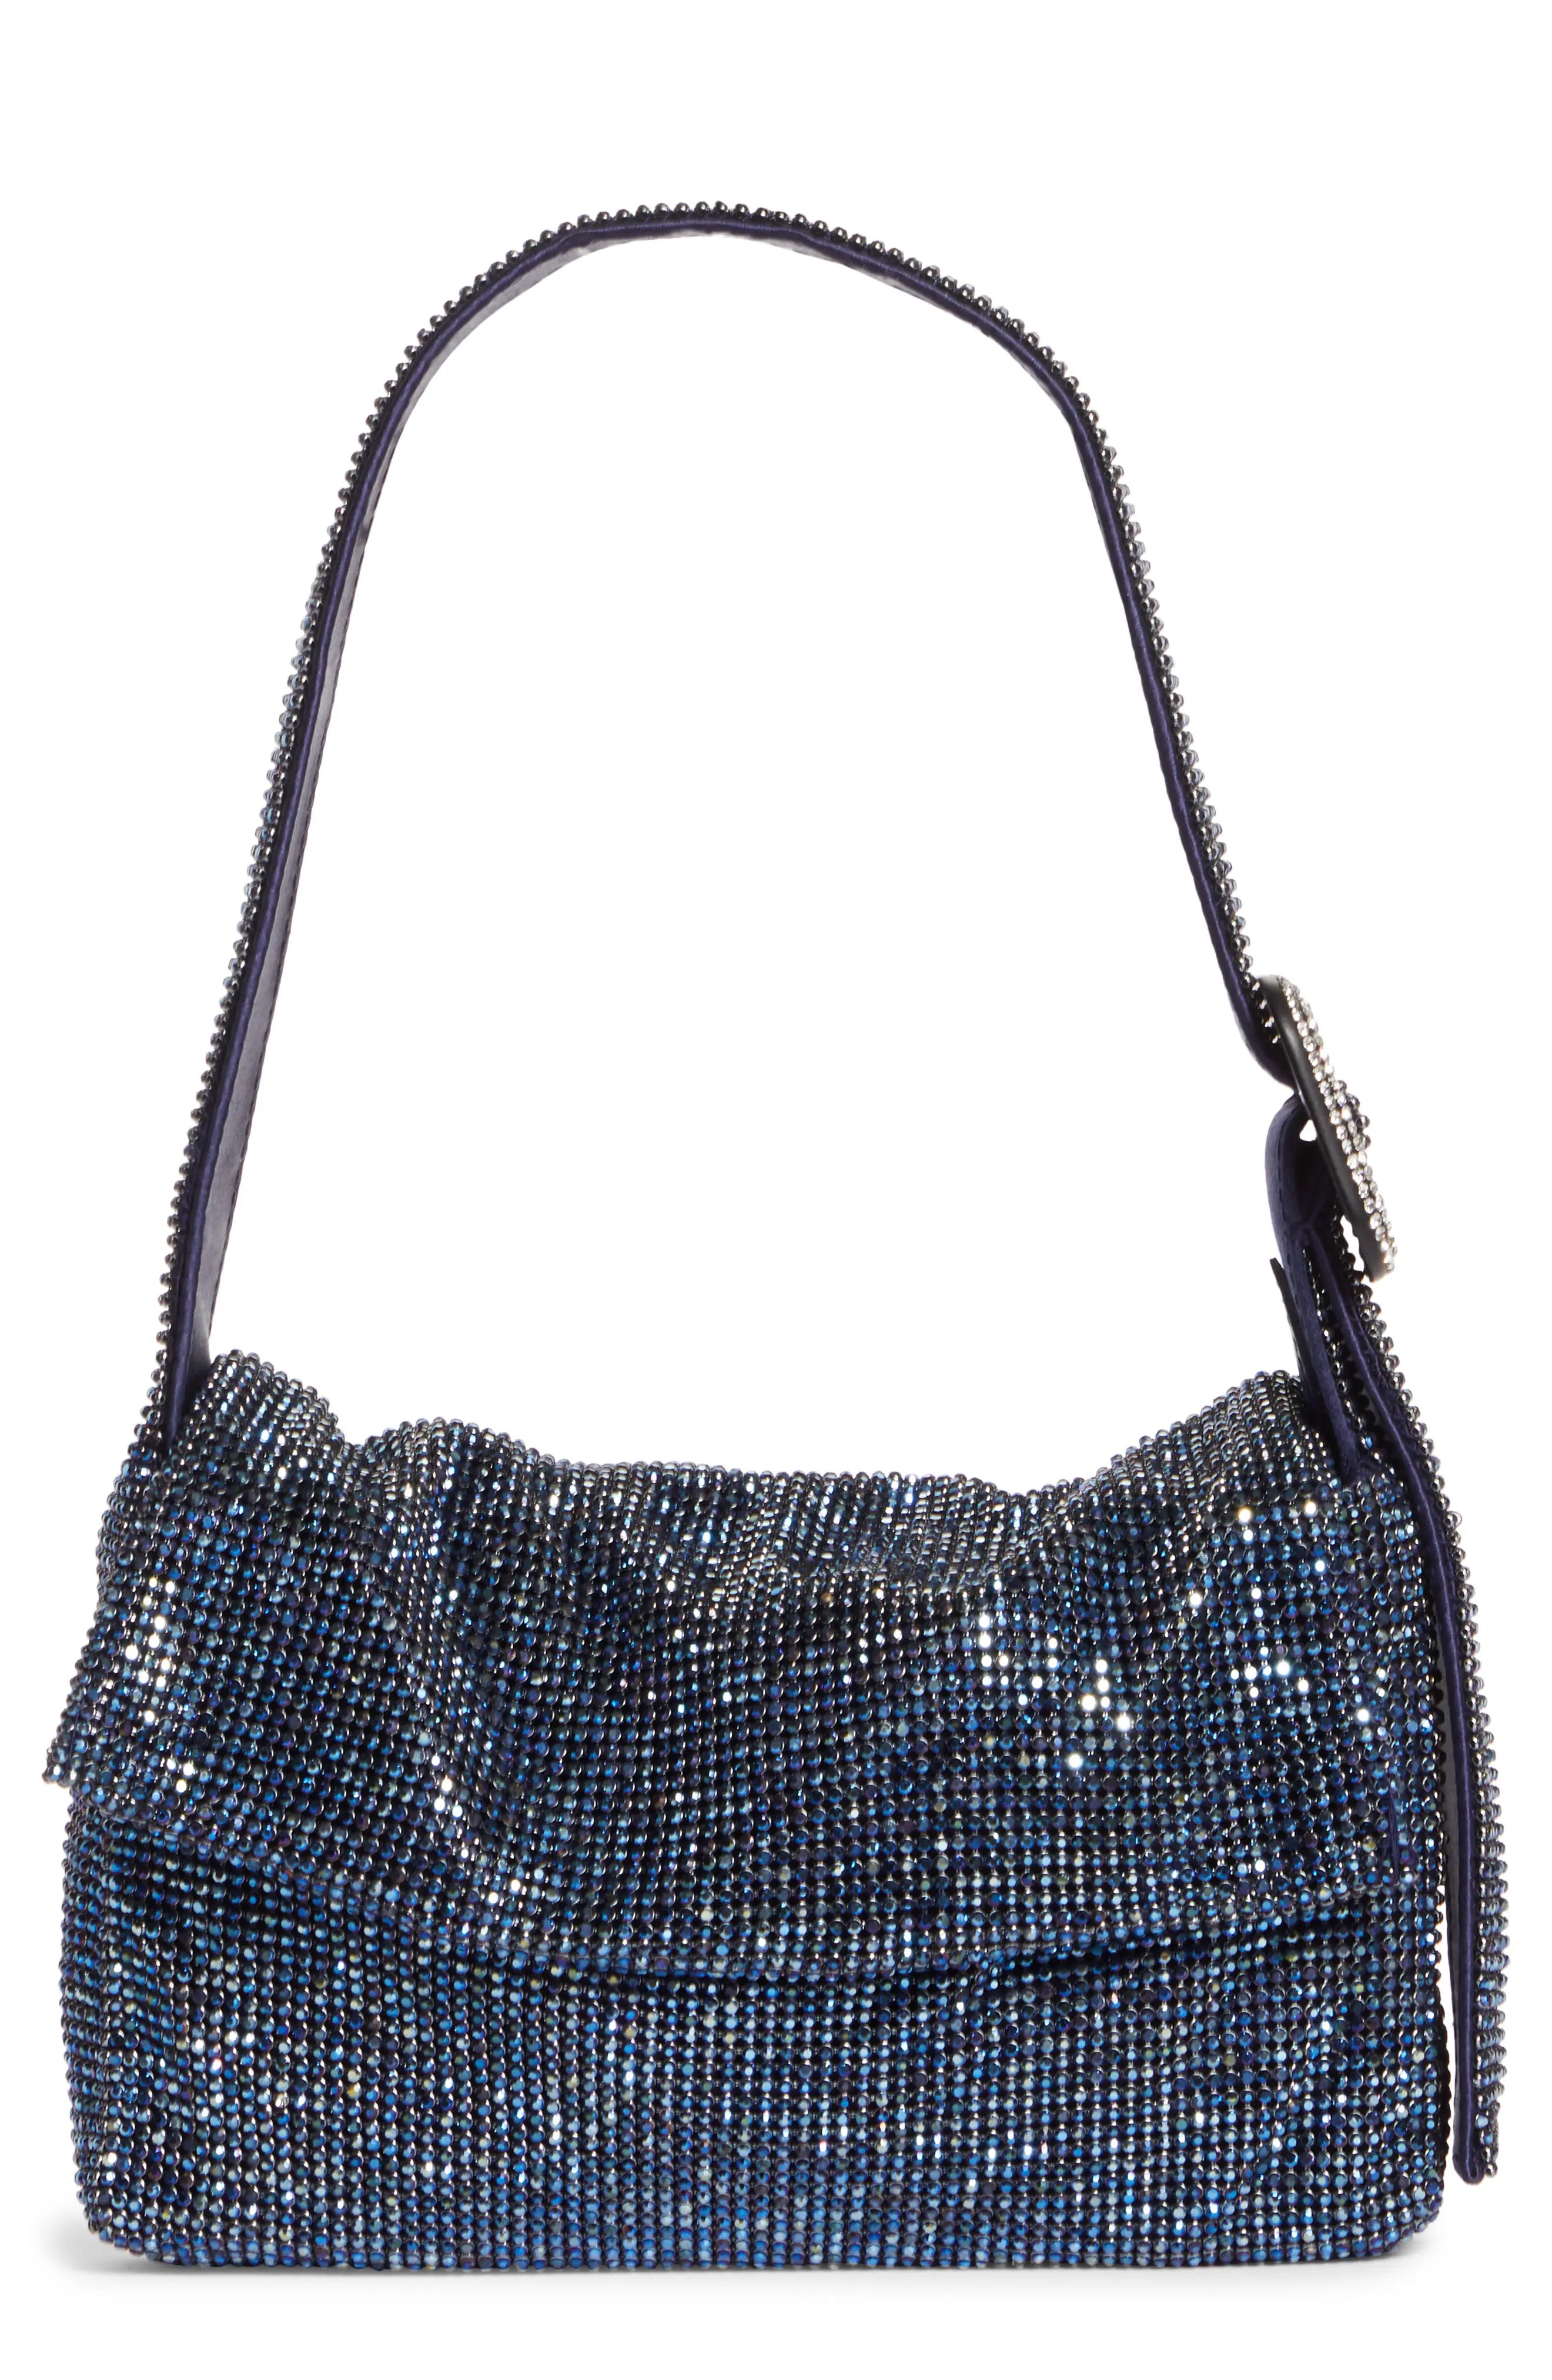 Benedetta Bruzziches Vitty Mignon Crystal Mesh Shoulder Bag in Norfolk Blue at Nordstrom | Nordstrom